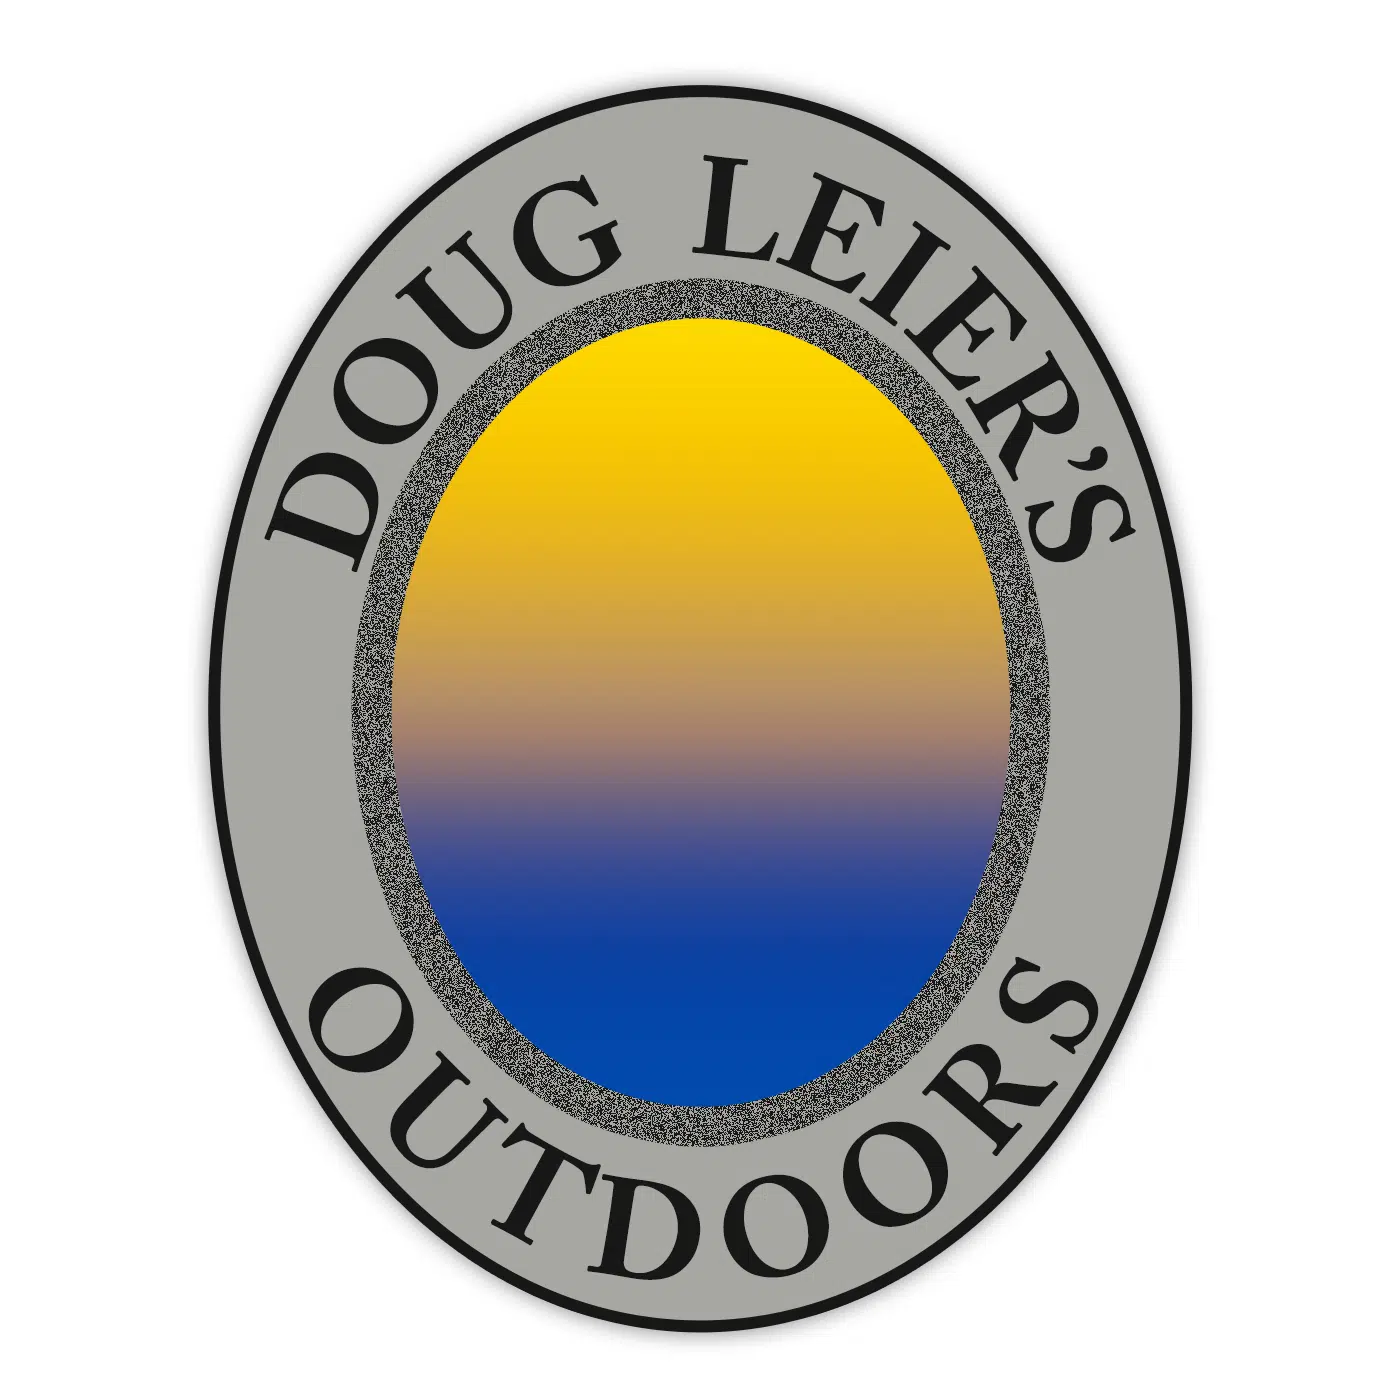 Doug Leier's Outdoors